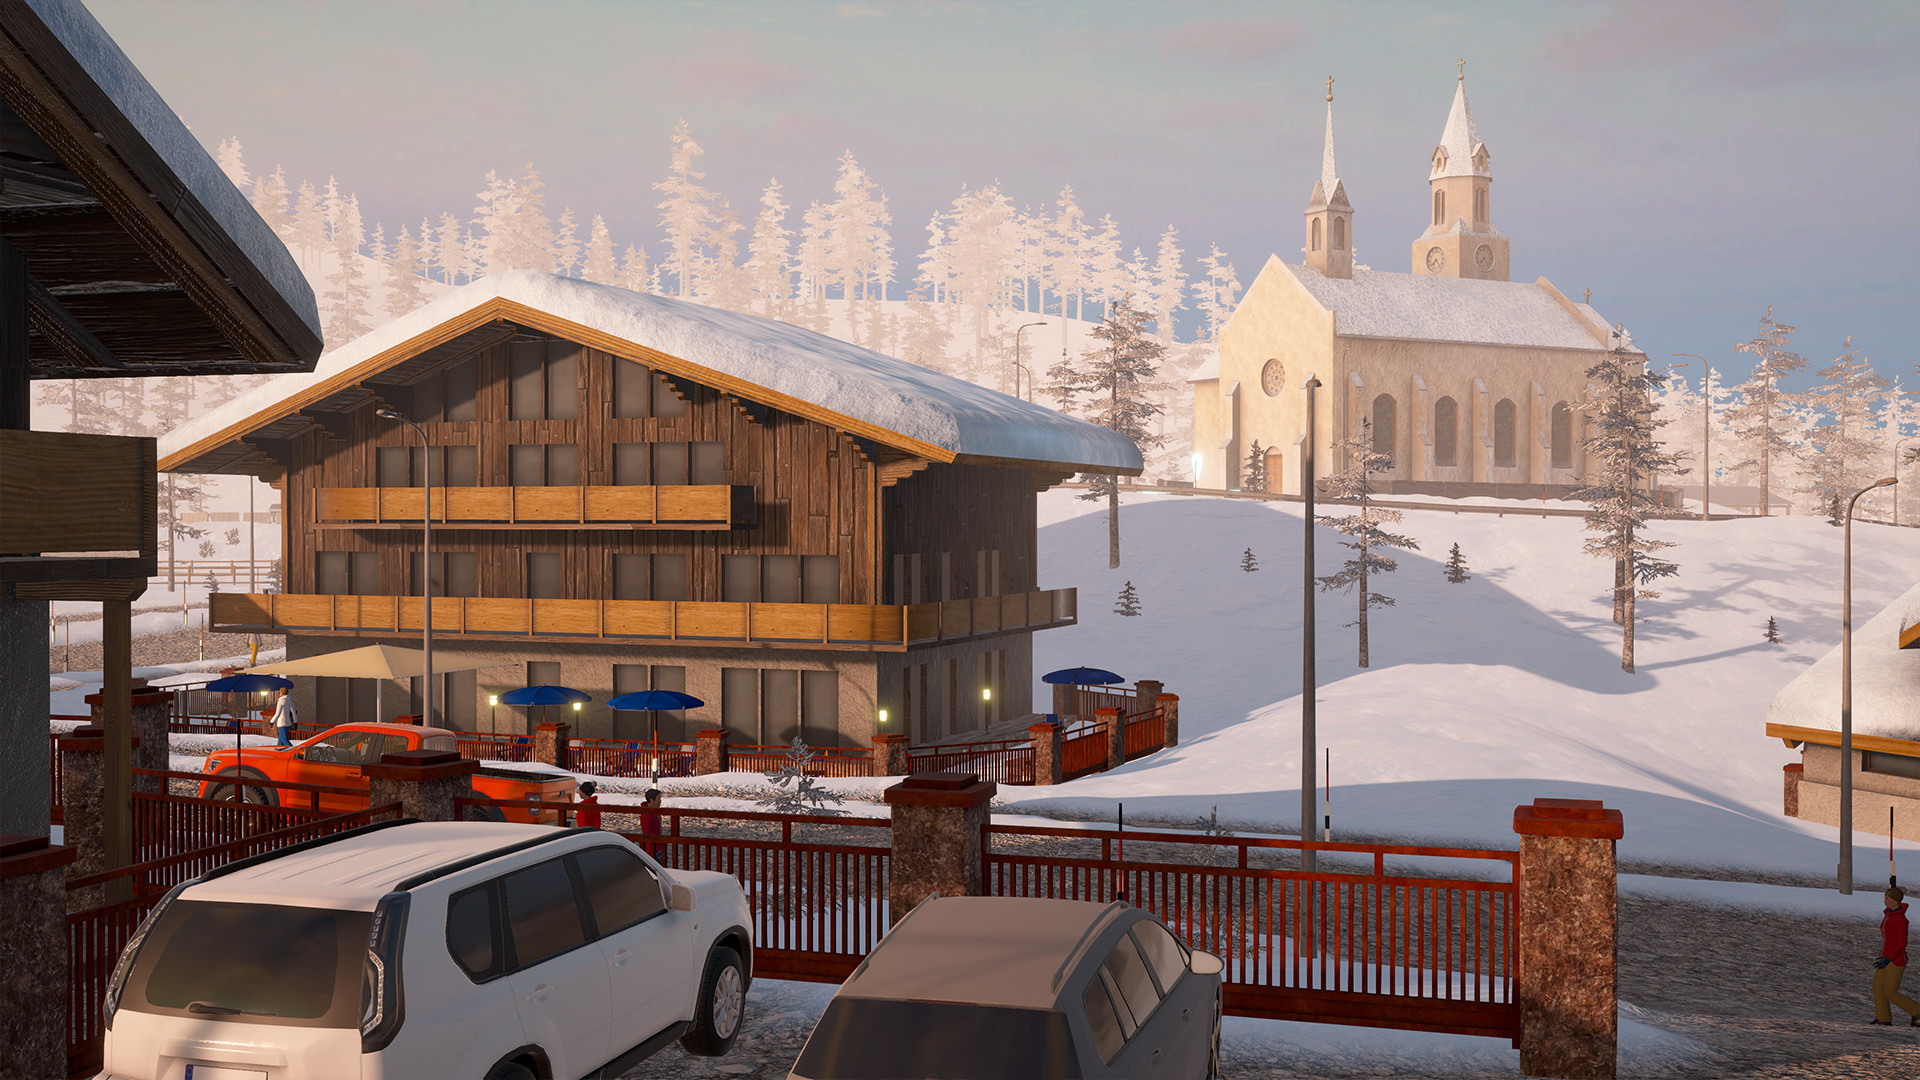 Alpine - The Simulation Game - screenshot 14